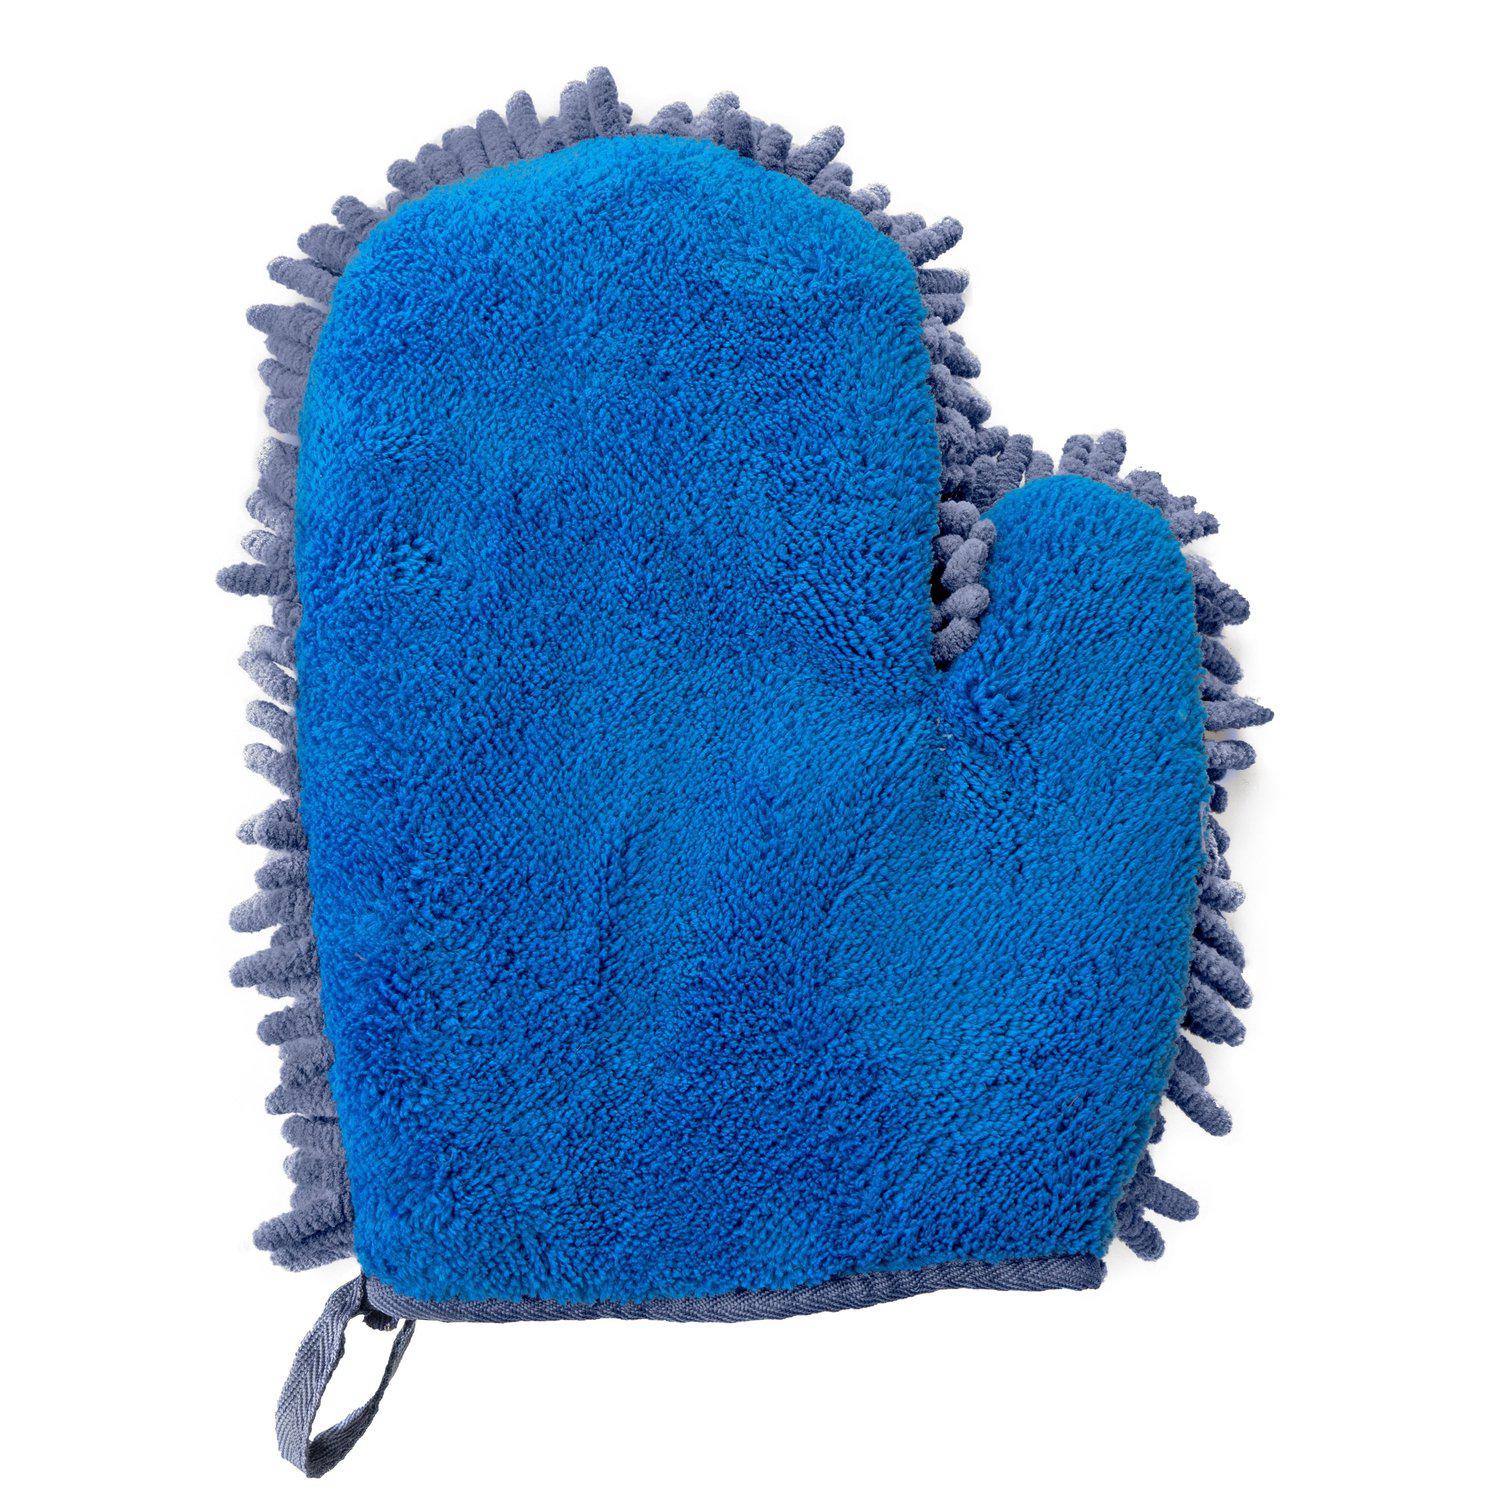 2-in-1 Clean & Polish Microfiber Mitt - Dual Purpose Cleaning Glove